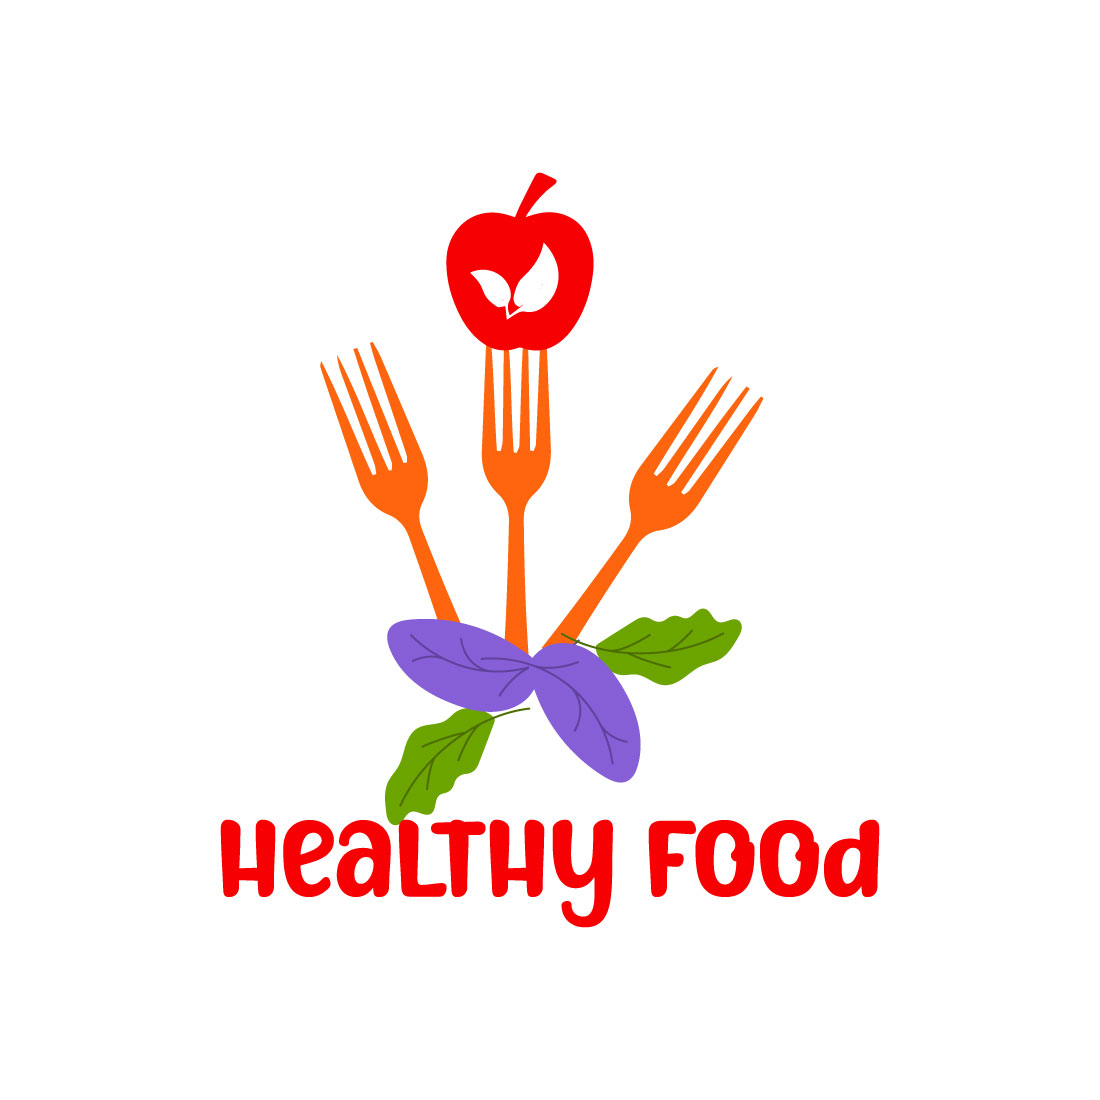 Free Better Health, Better Life logo cover image.